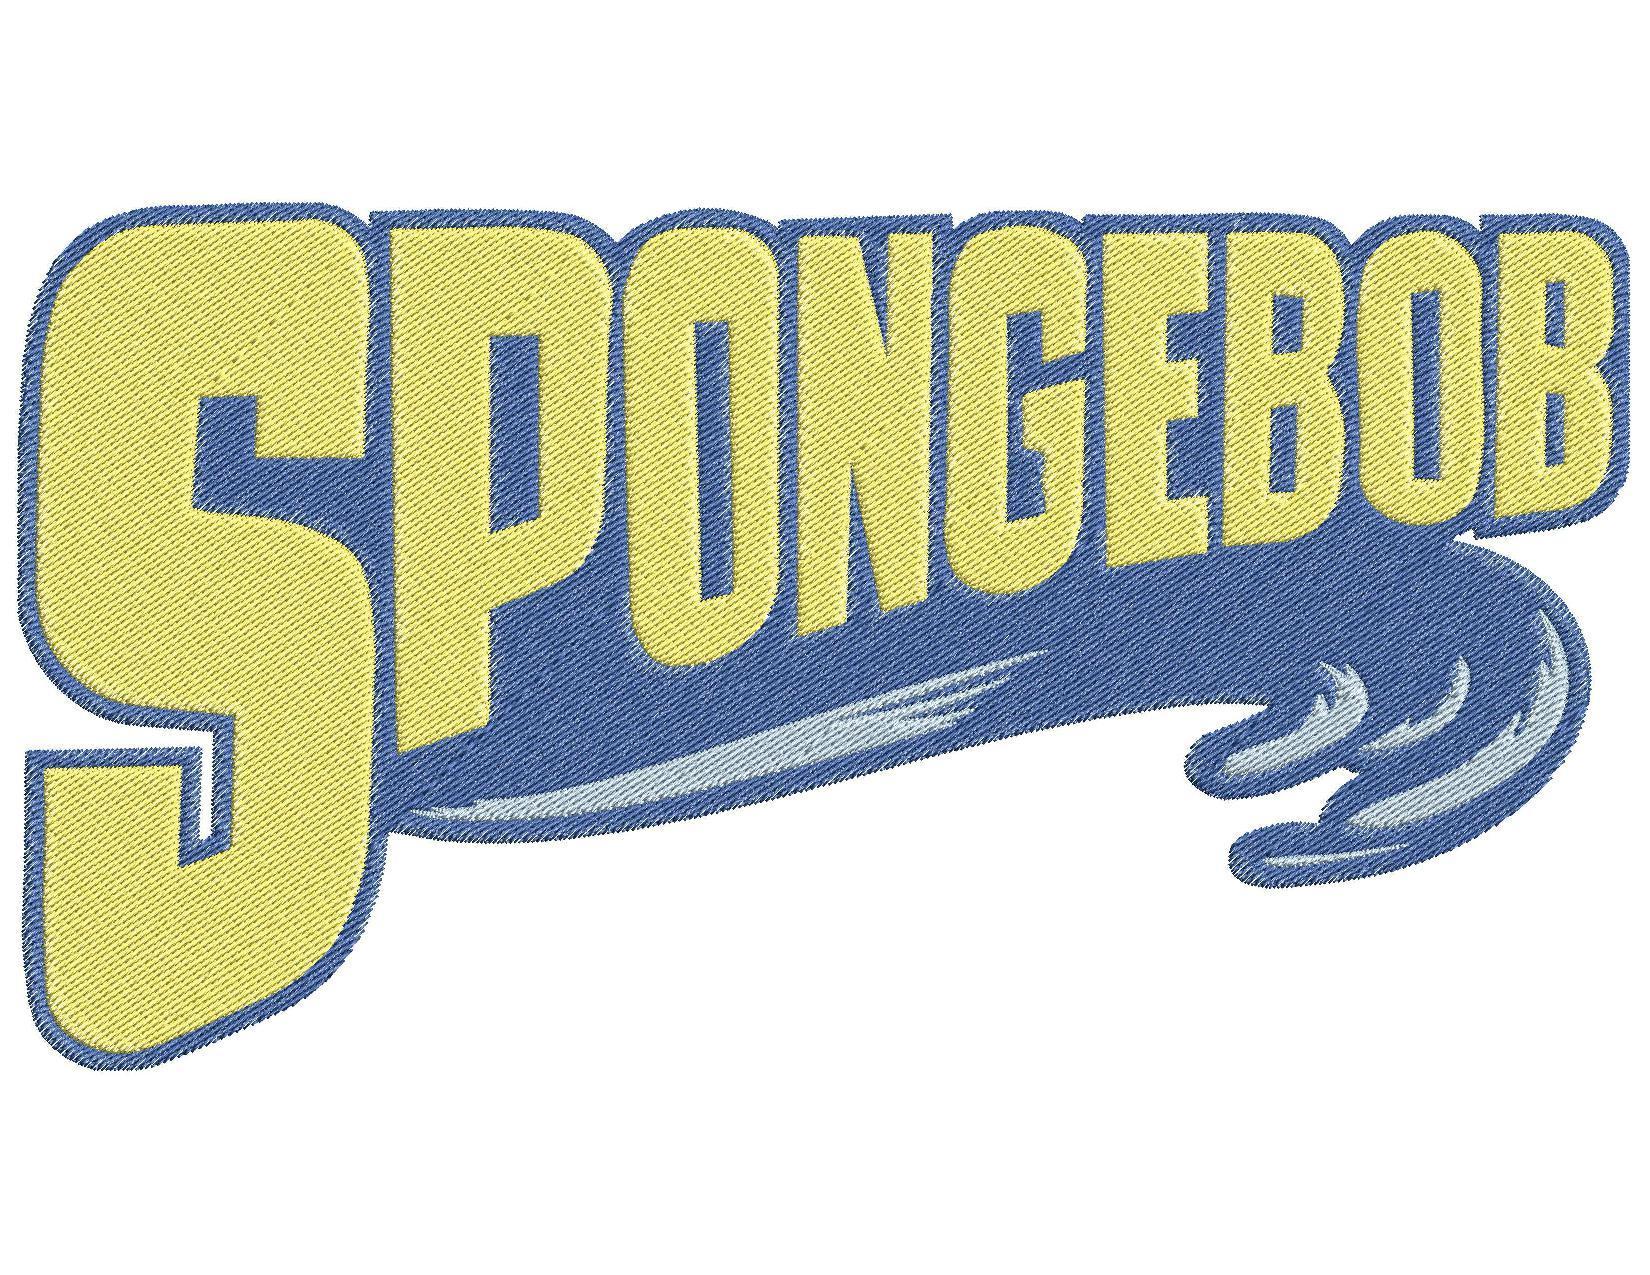 Spongebob SquarePants Logo - SpongeBob SquarePants SpongeBob logo Embroidery Design